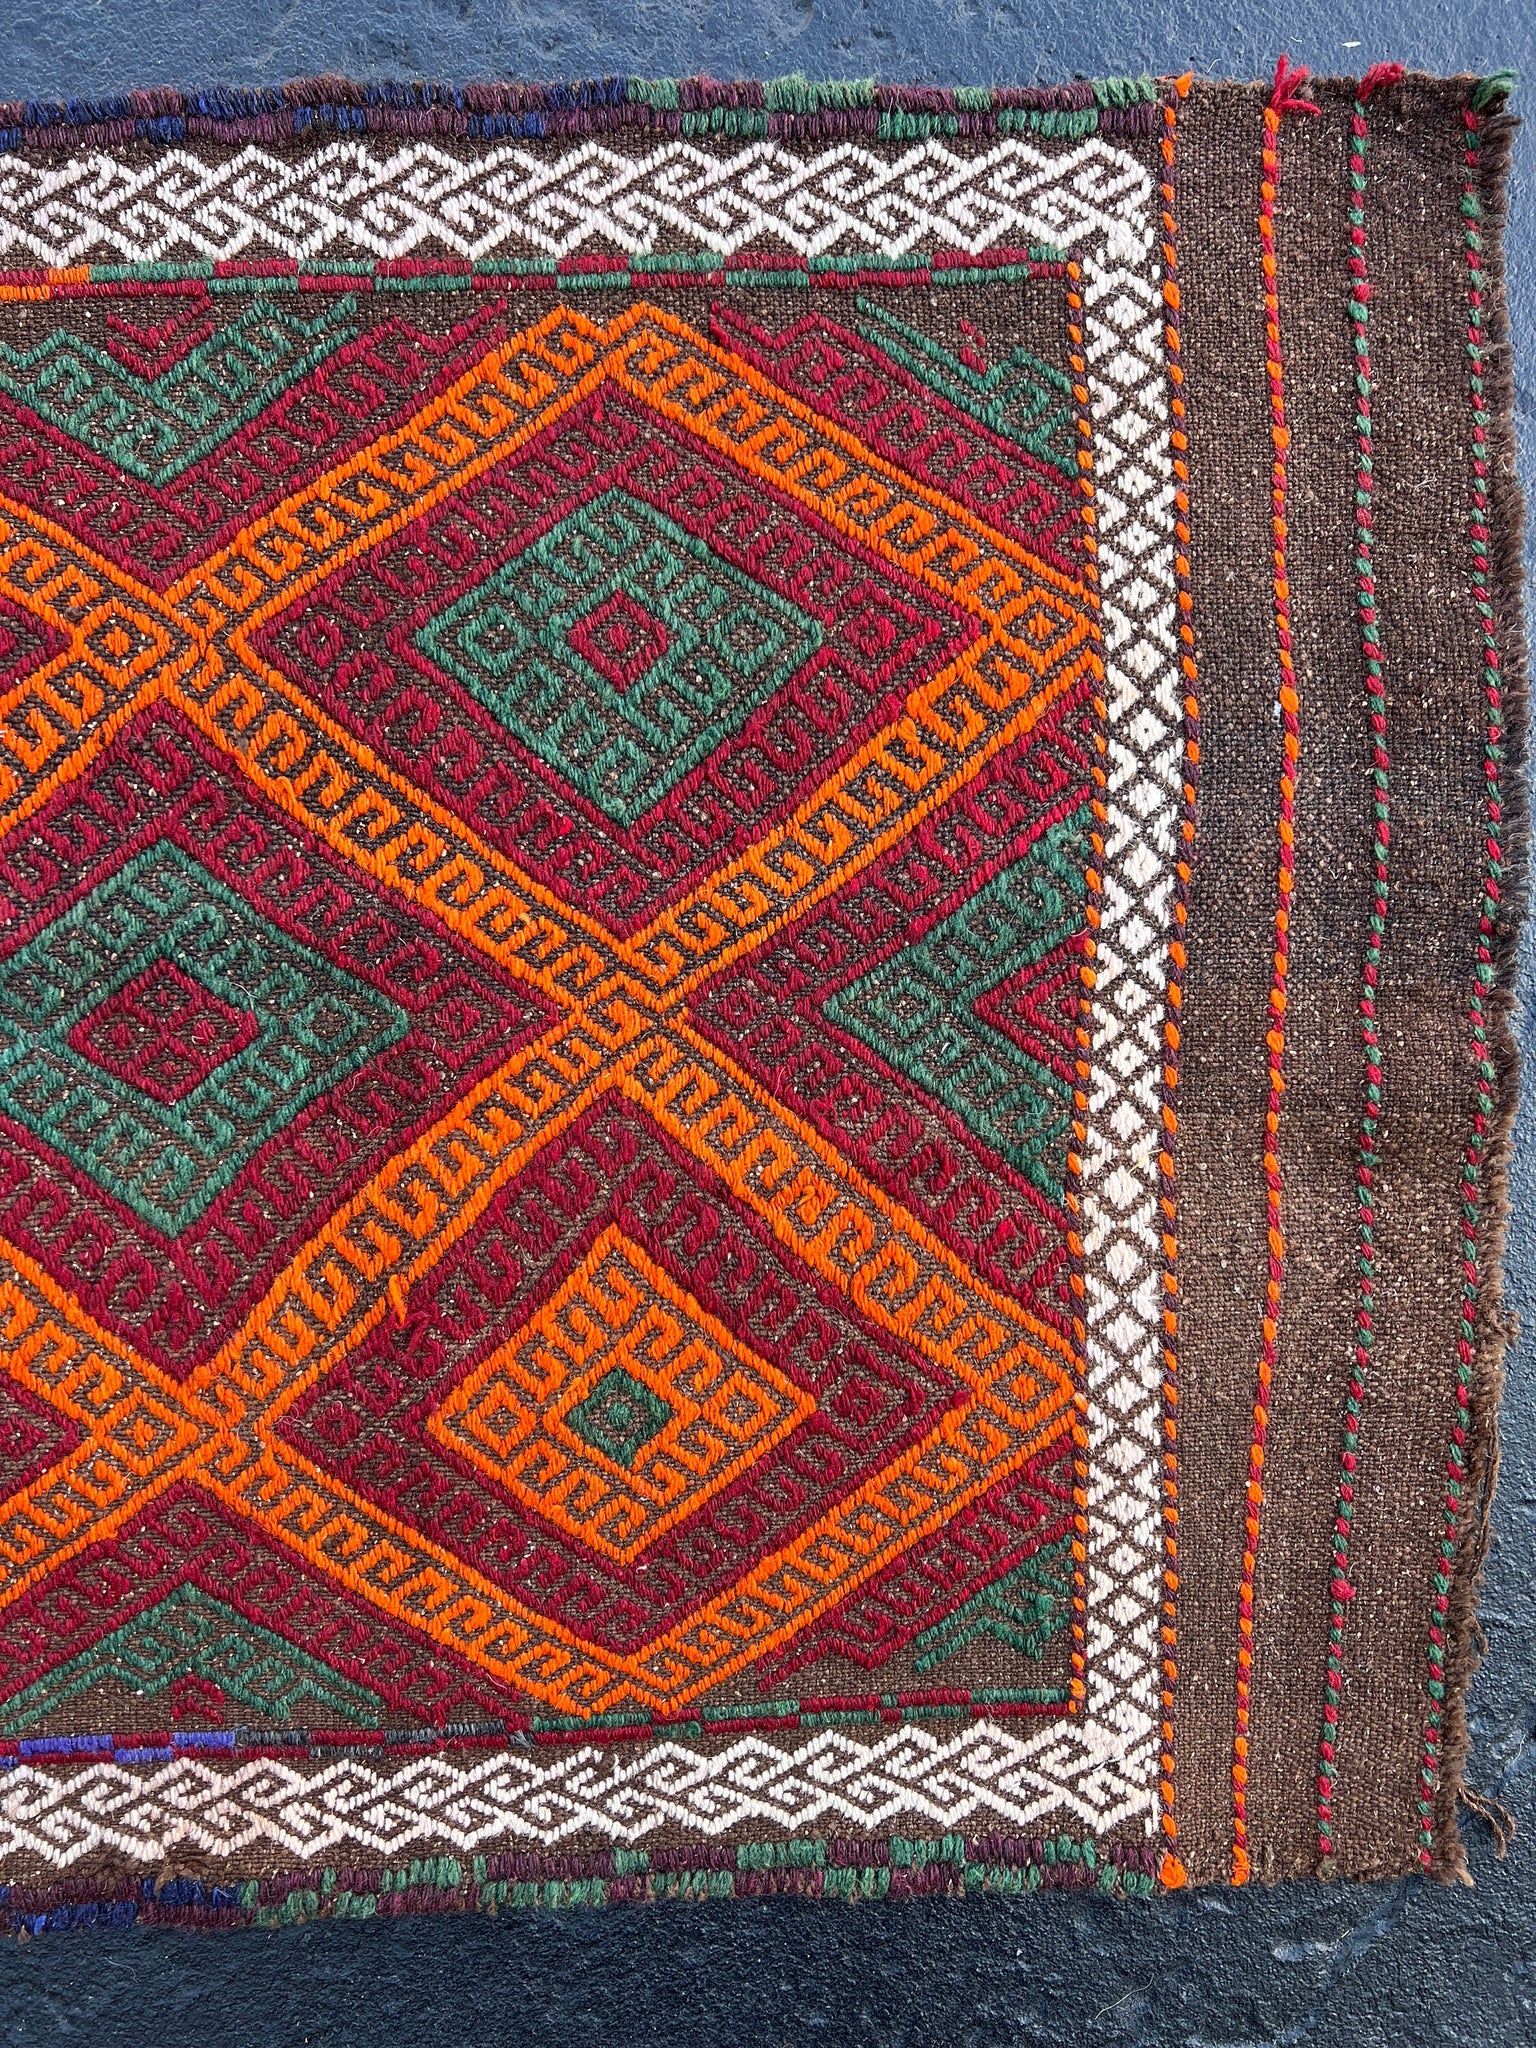 2x8-3x9 Handmade Afghan Kilim Runner Rug | Chocolate Brown Orange Crimson Red Forest Green Cream Beige Ivory Black Purple | Wool Oushak